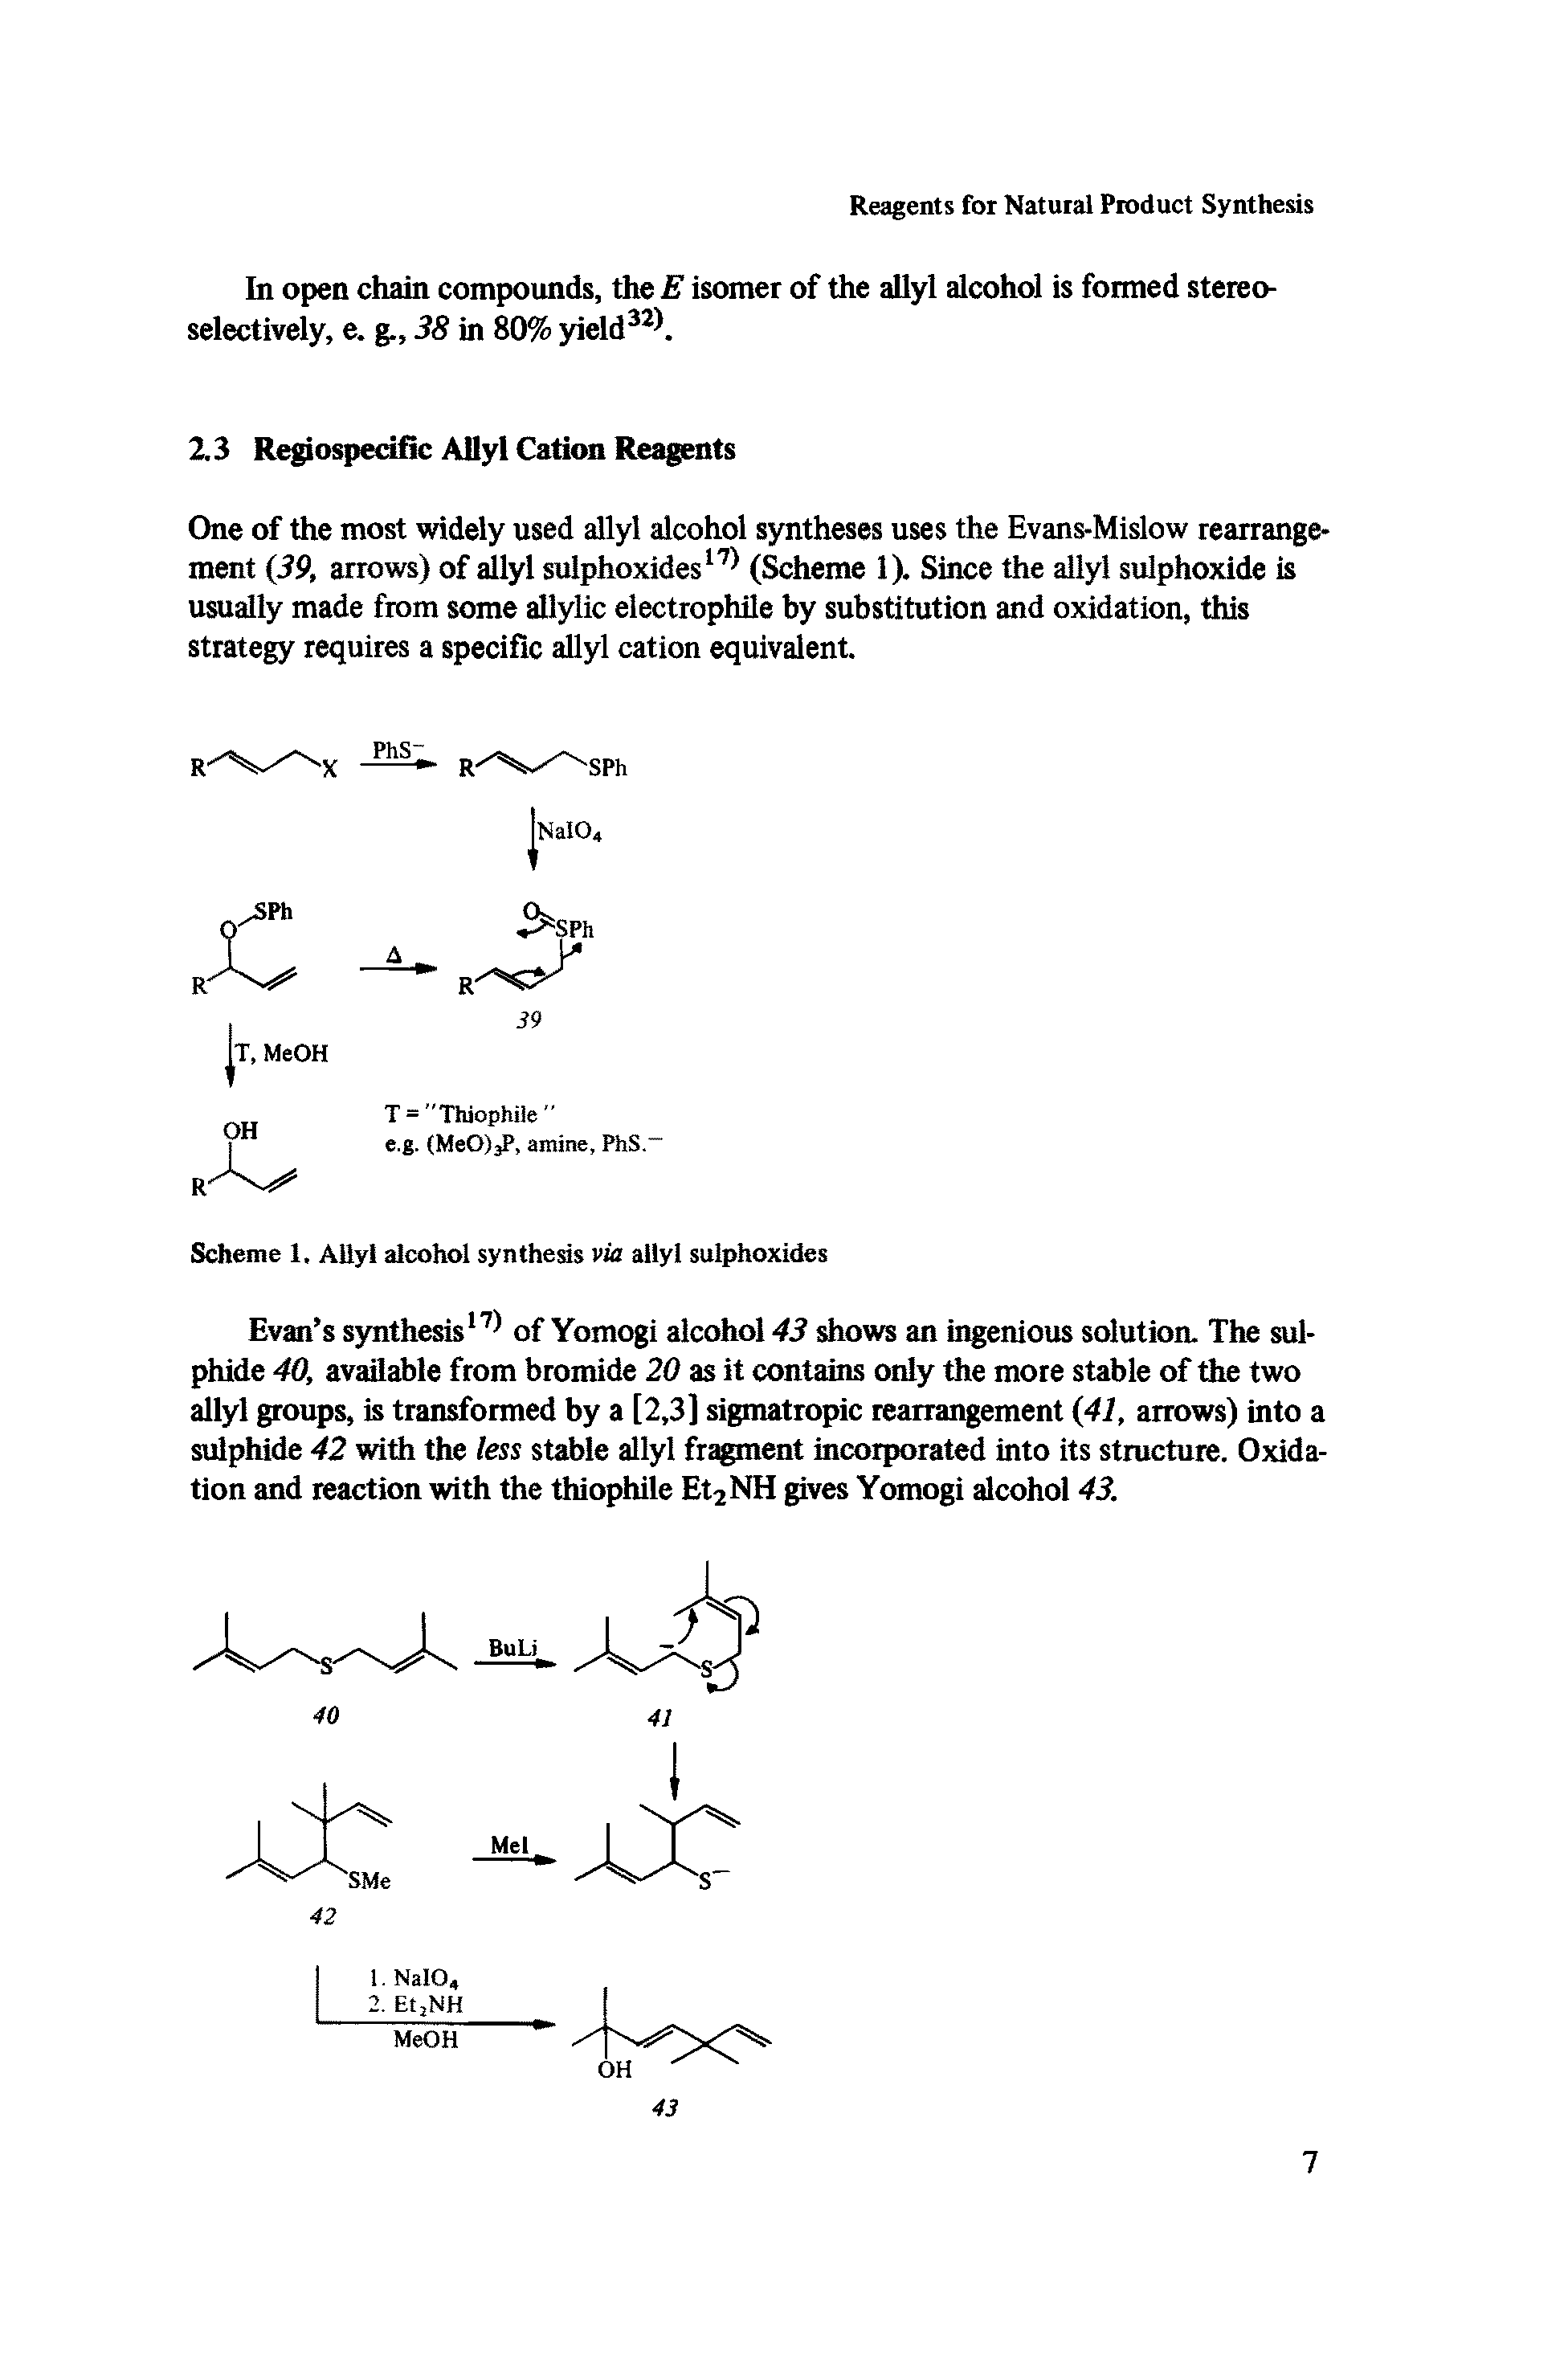 Scheme 1, Allyl alcohol synthesis via allyl sulphoxides...